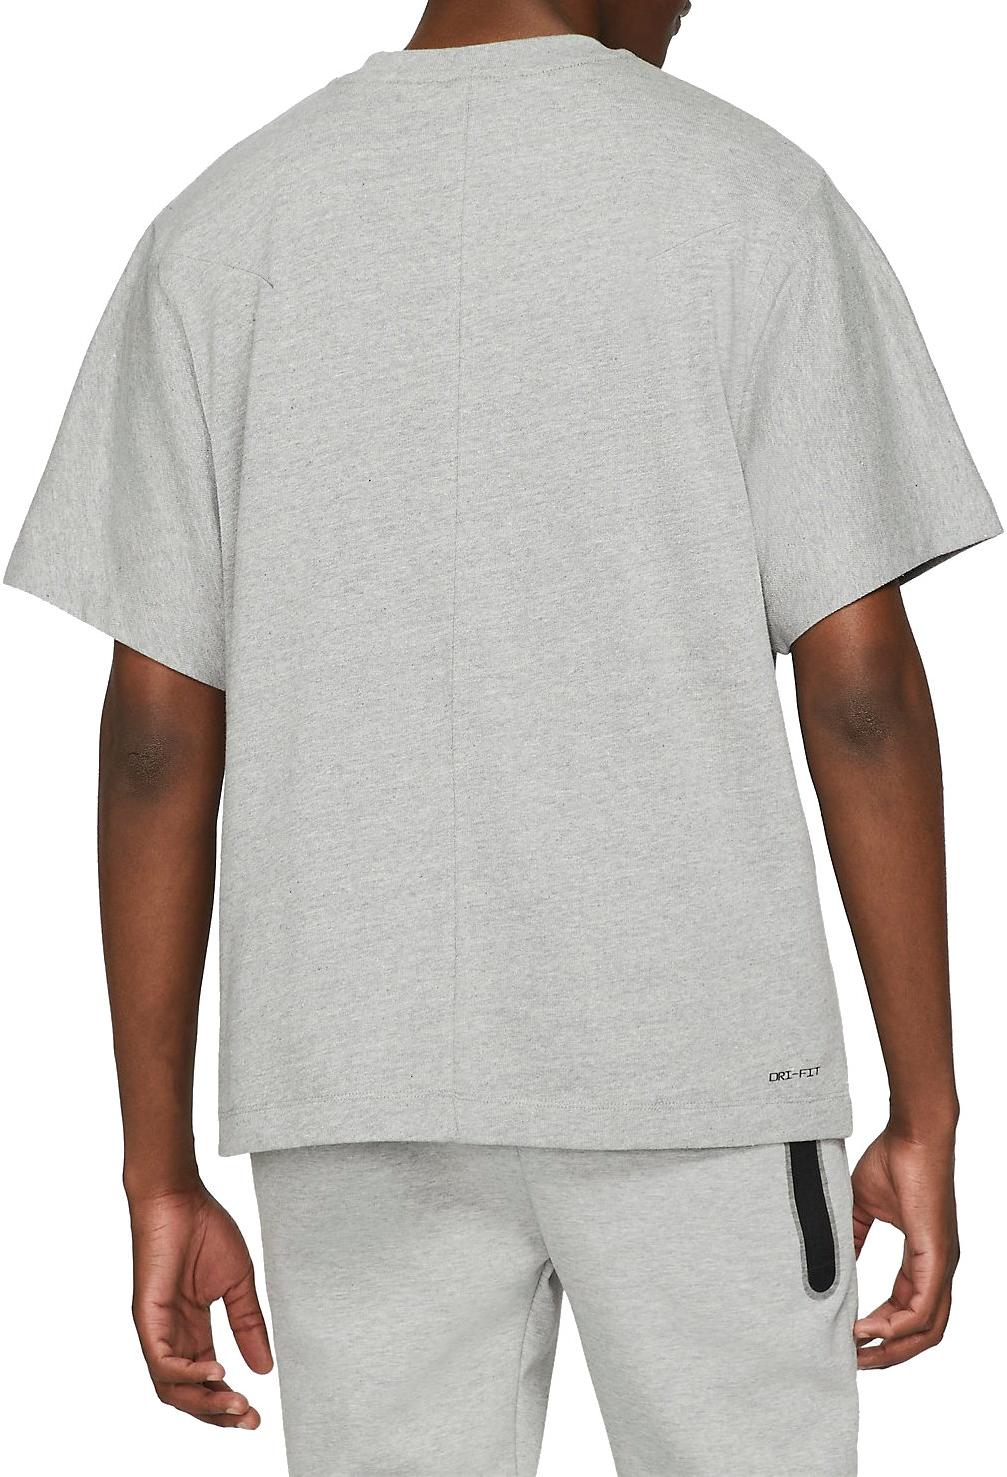 Camiseta Nike Dri-FIT Tech Essentials Men s Short-Sleeve Top - Top4Fitness.es